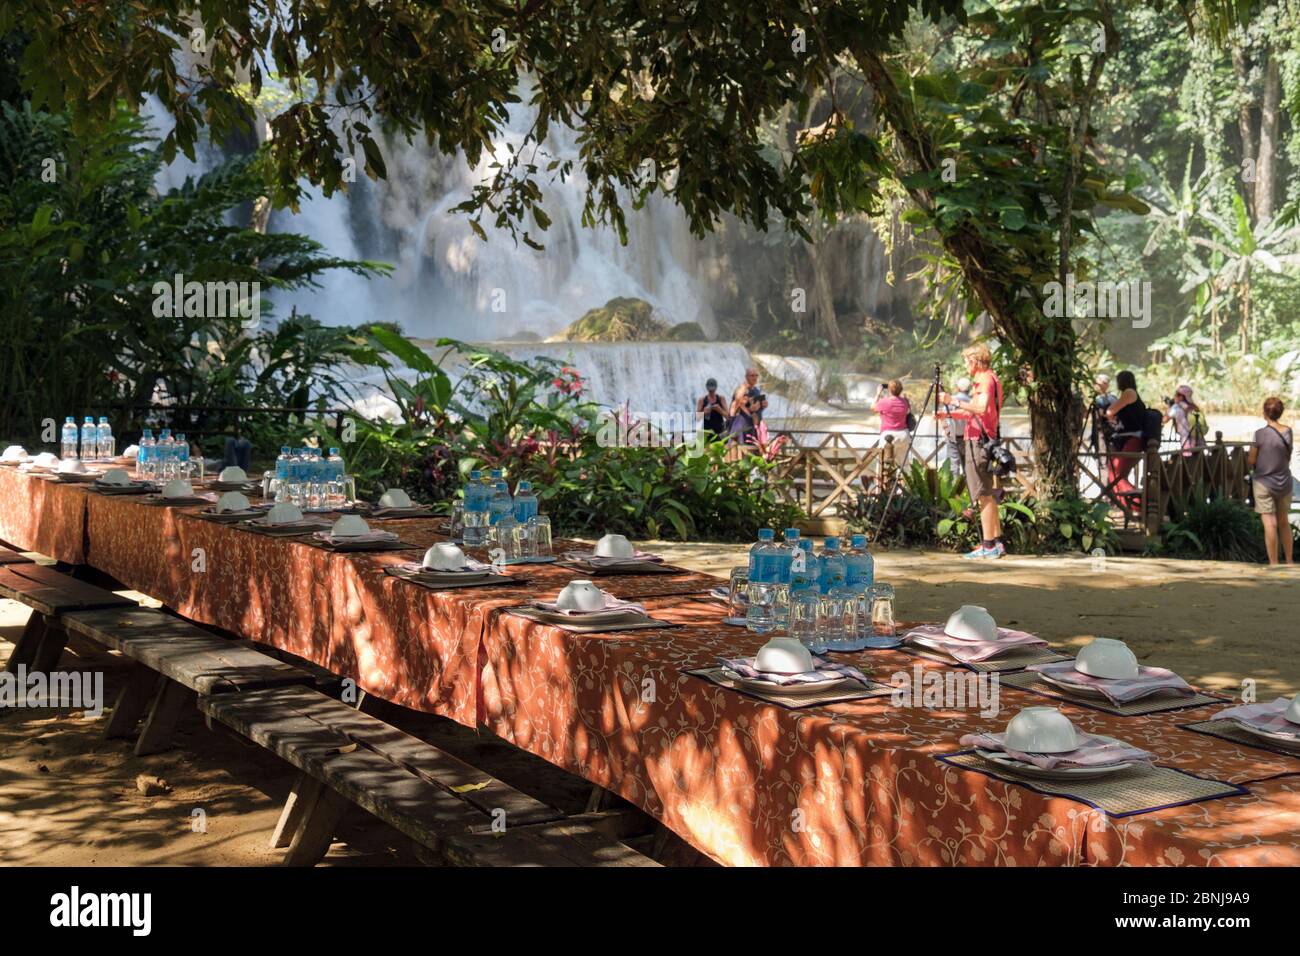 Restaurant tables outdoors with place settings at Tat Kuang Si or Xi waterfalls. Luang Prabang, Louangphabang province, Laos, southeast Asia Stock Photo